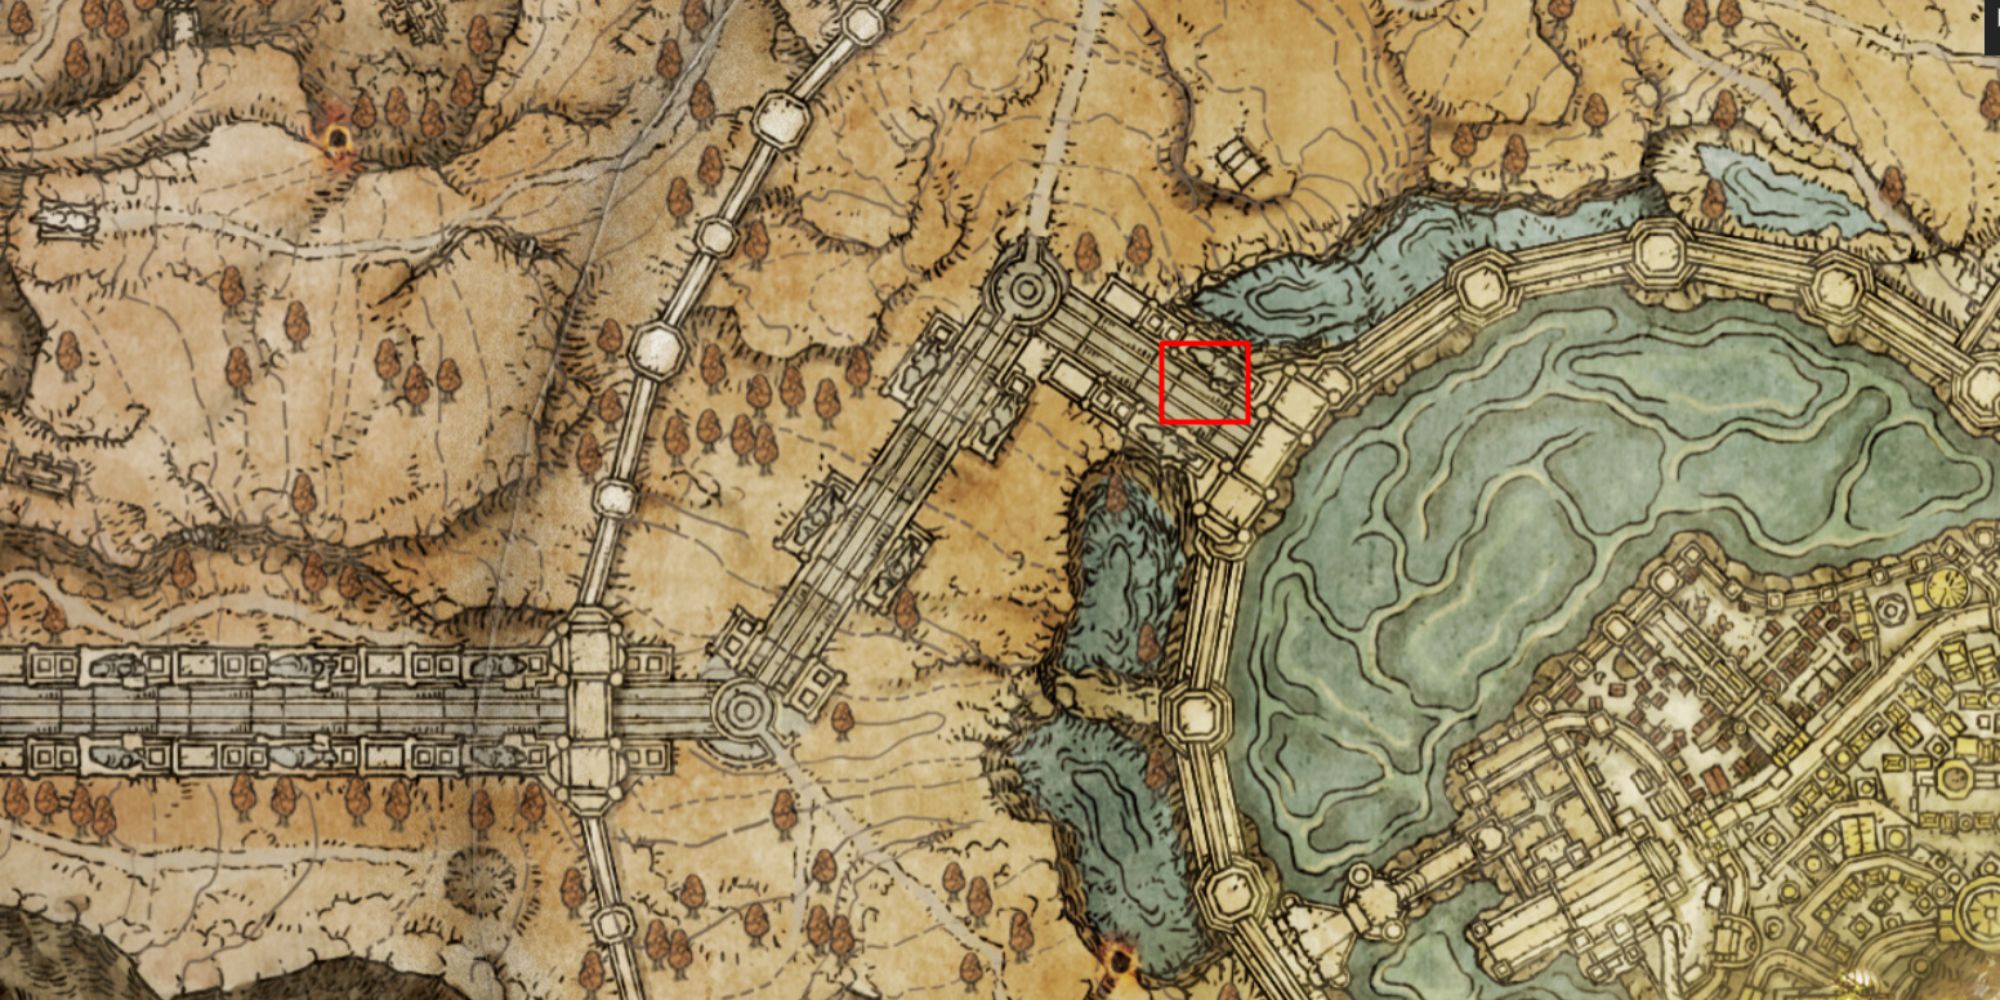 Leyndell's entrance marked on map in Elden Ring